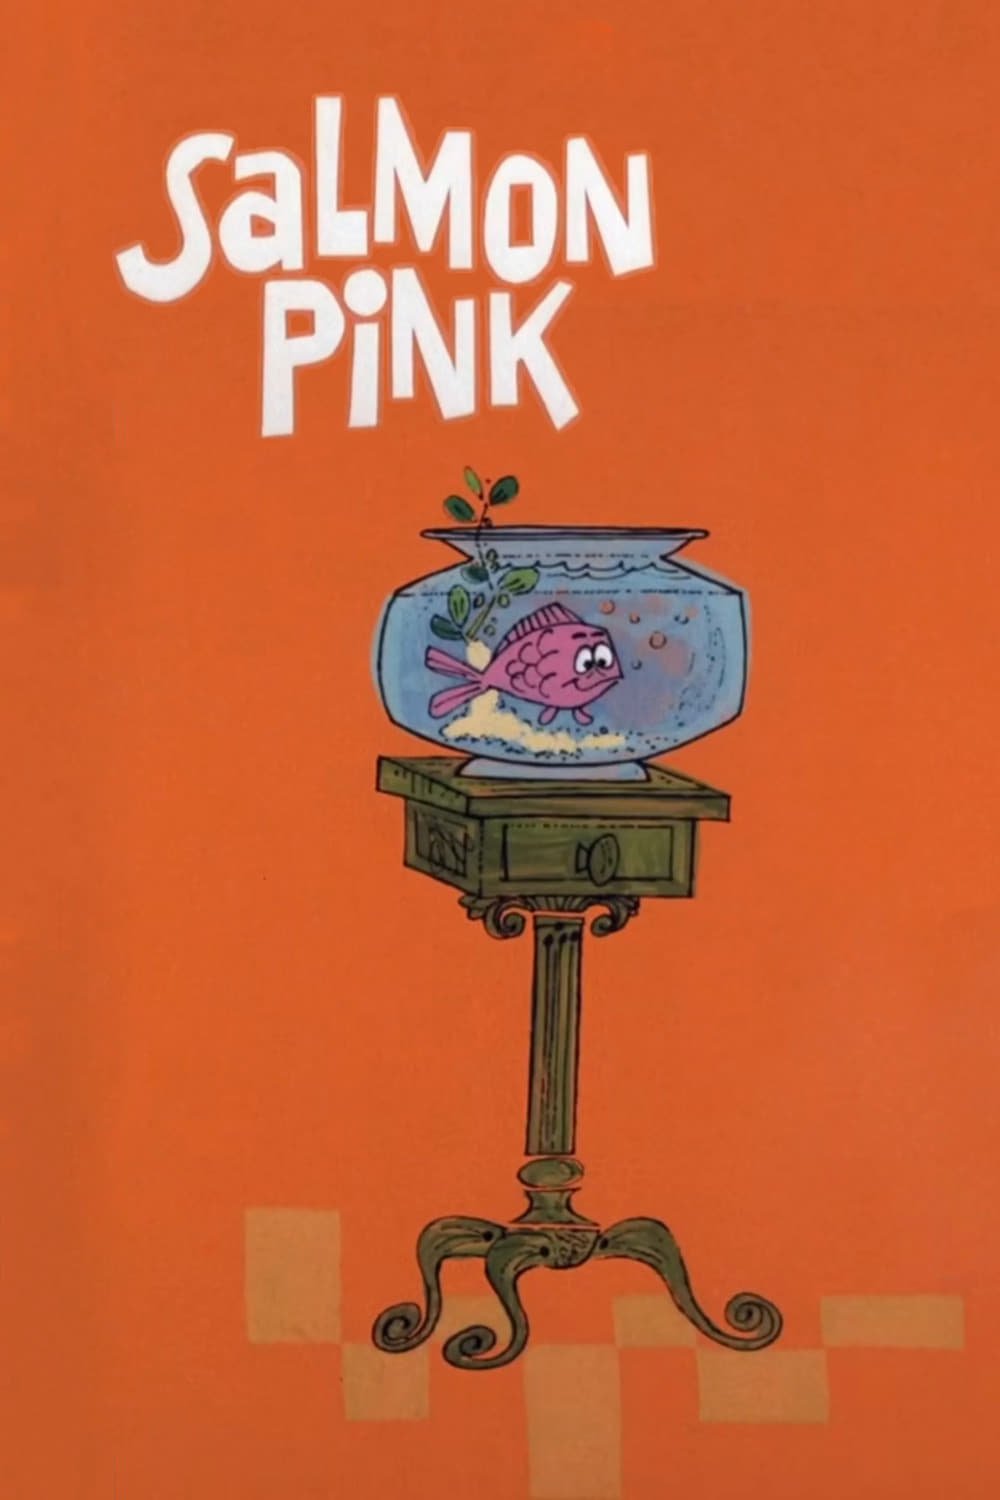 Salmon Pink (1975)